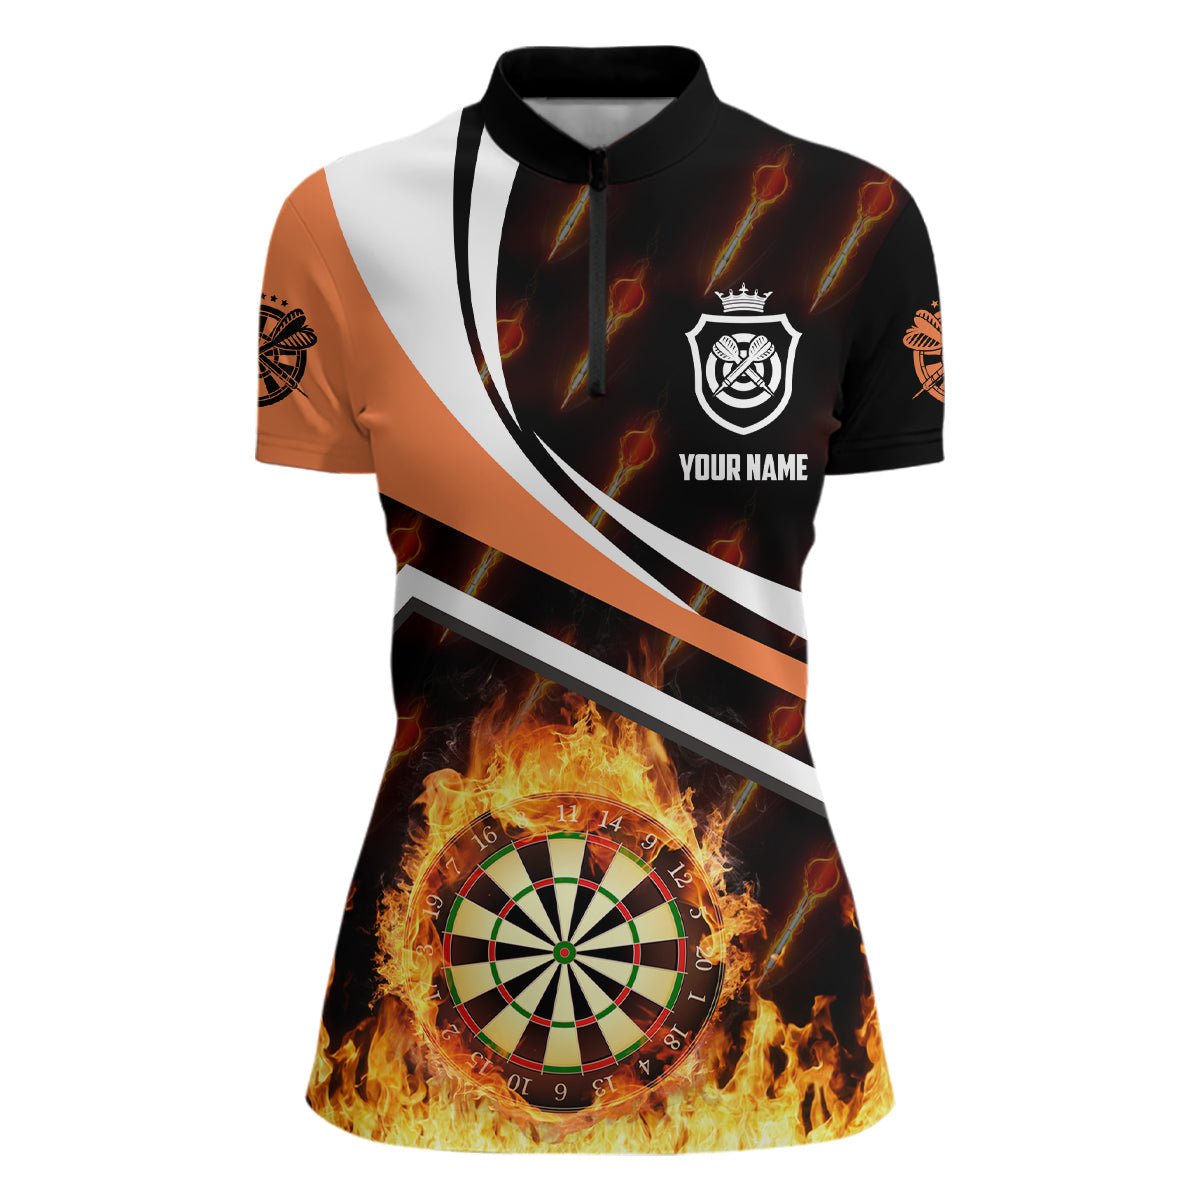 Women's Darts Shirt with Orange Fire Flames Design - Personalized 1/4 Zip Darts Jersey W989